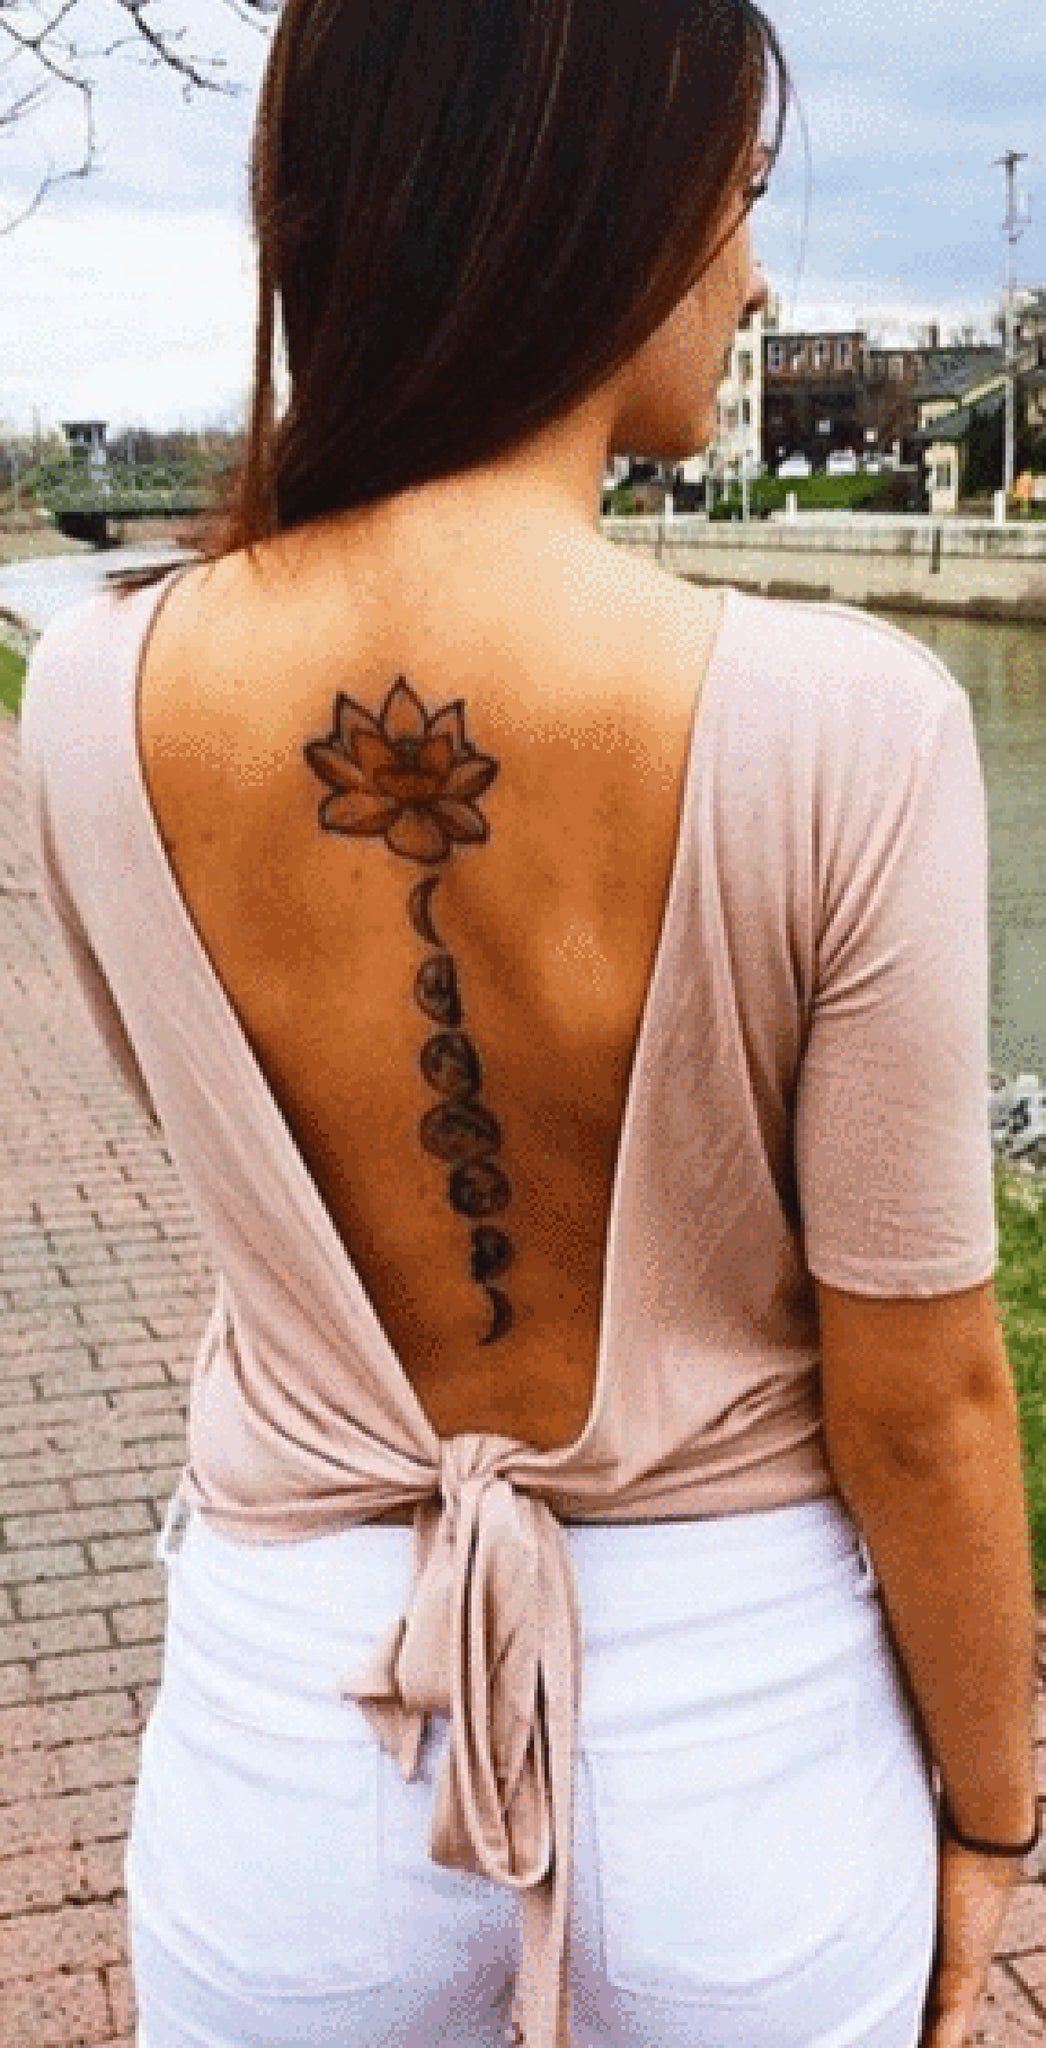 Nature Lotus Tattoo Ideas for Women - Flower Moon Phases Back Tat - ideas de tatuaje de luna y loto para mujeres - www.MyBodiArt.com